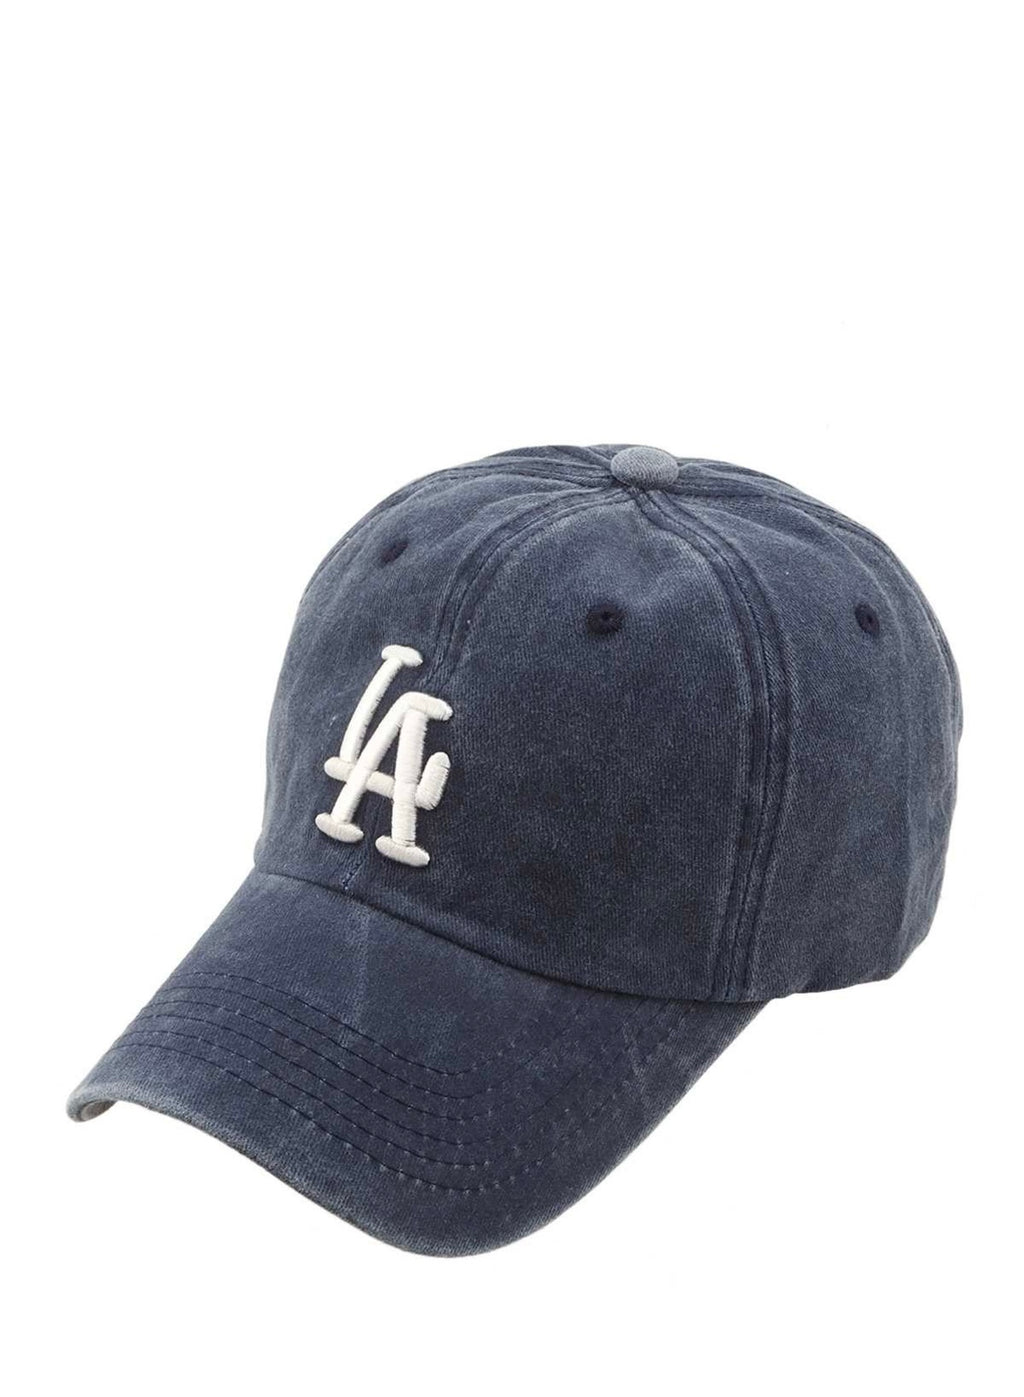 LA baseball cap